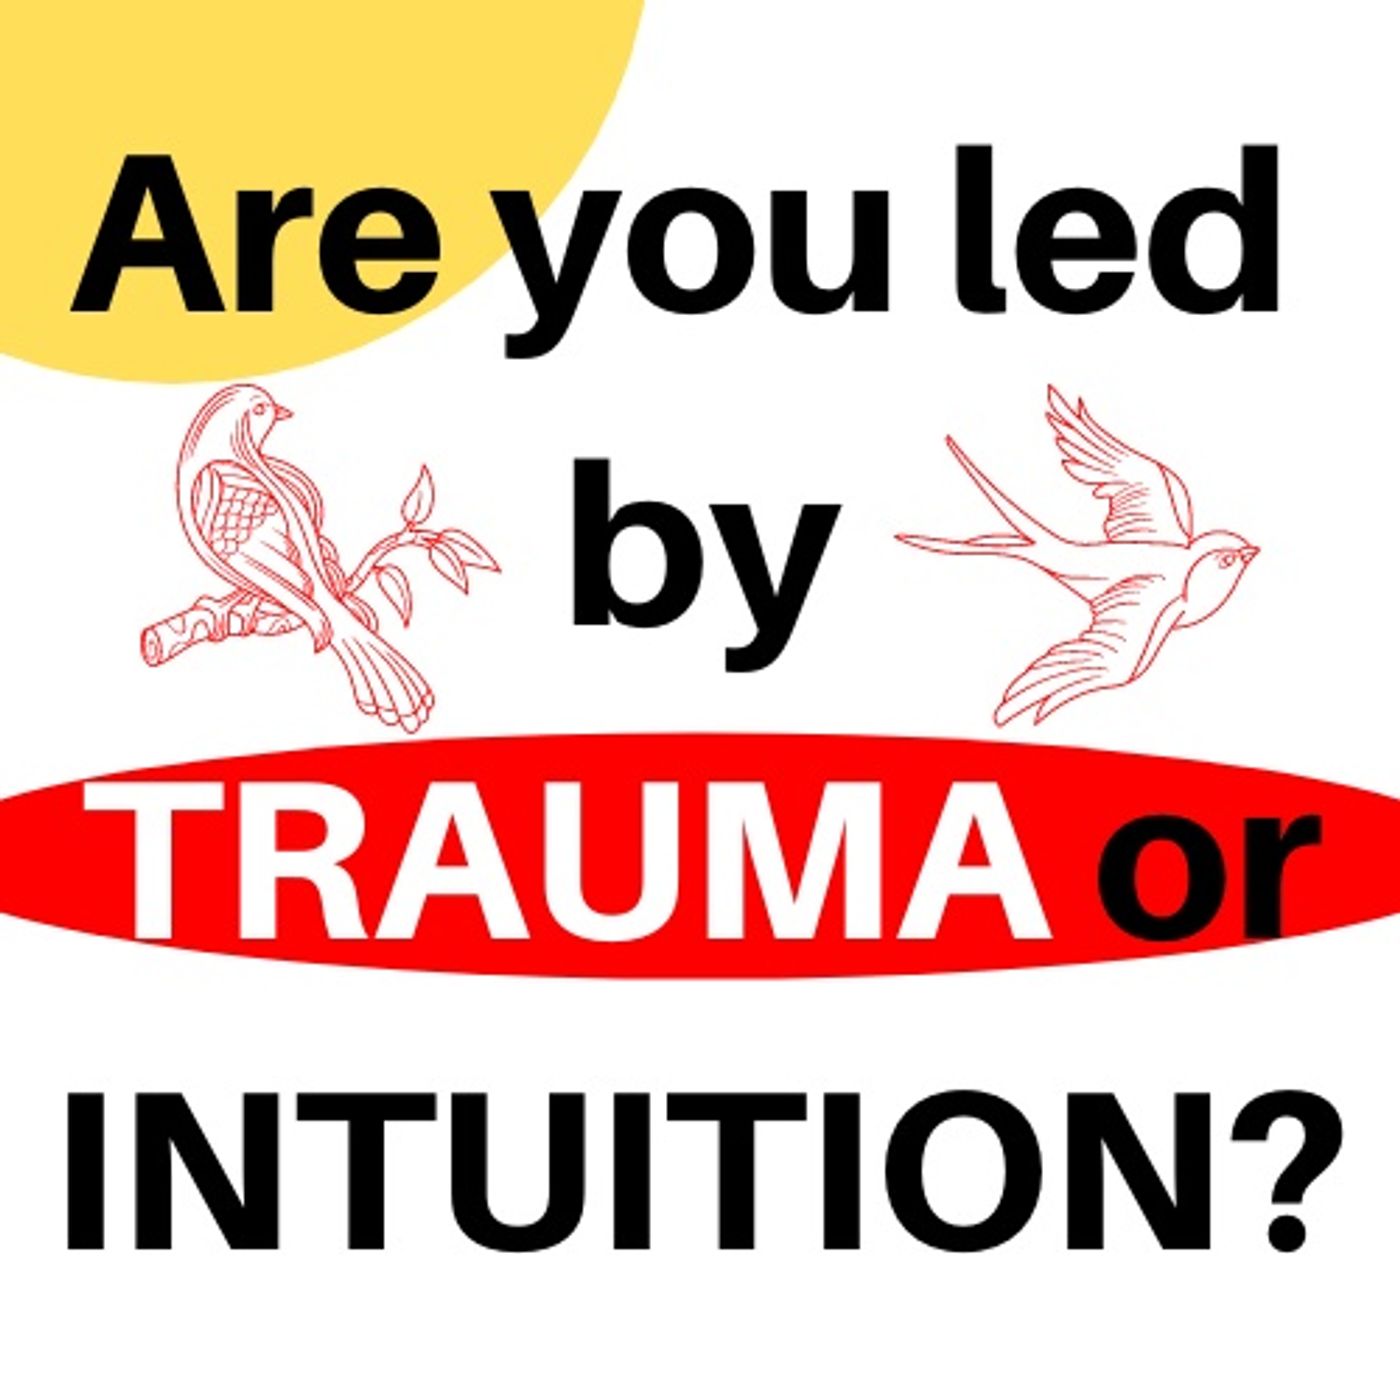 Intuition vs Trauma